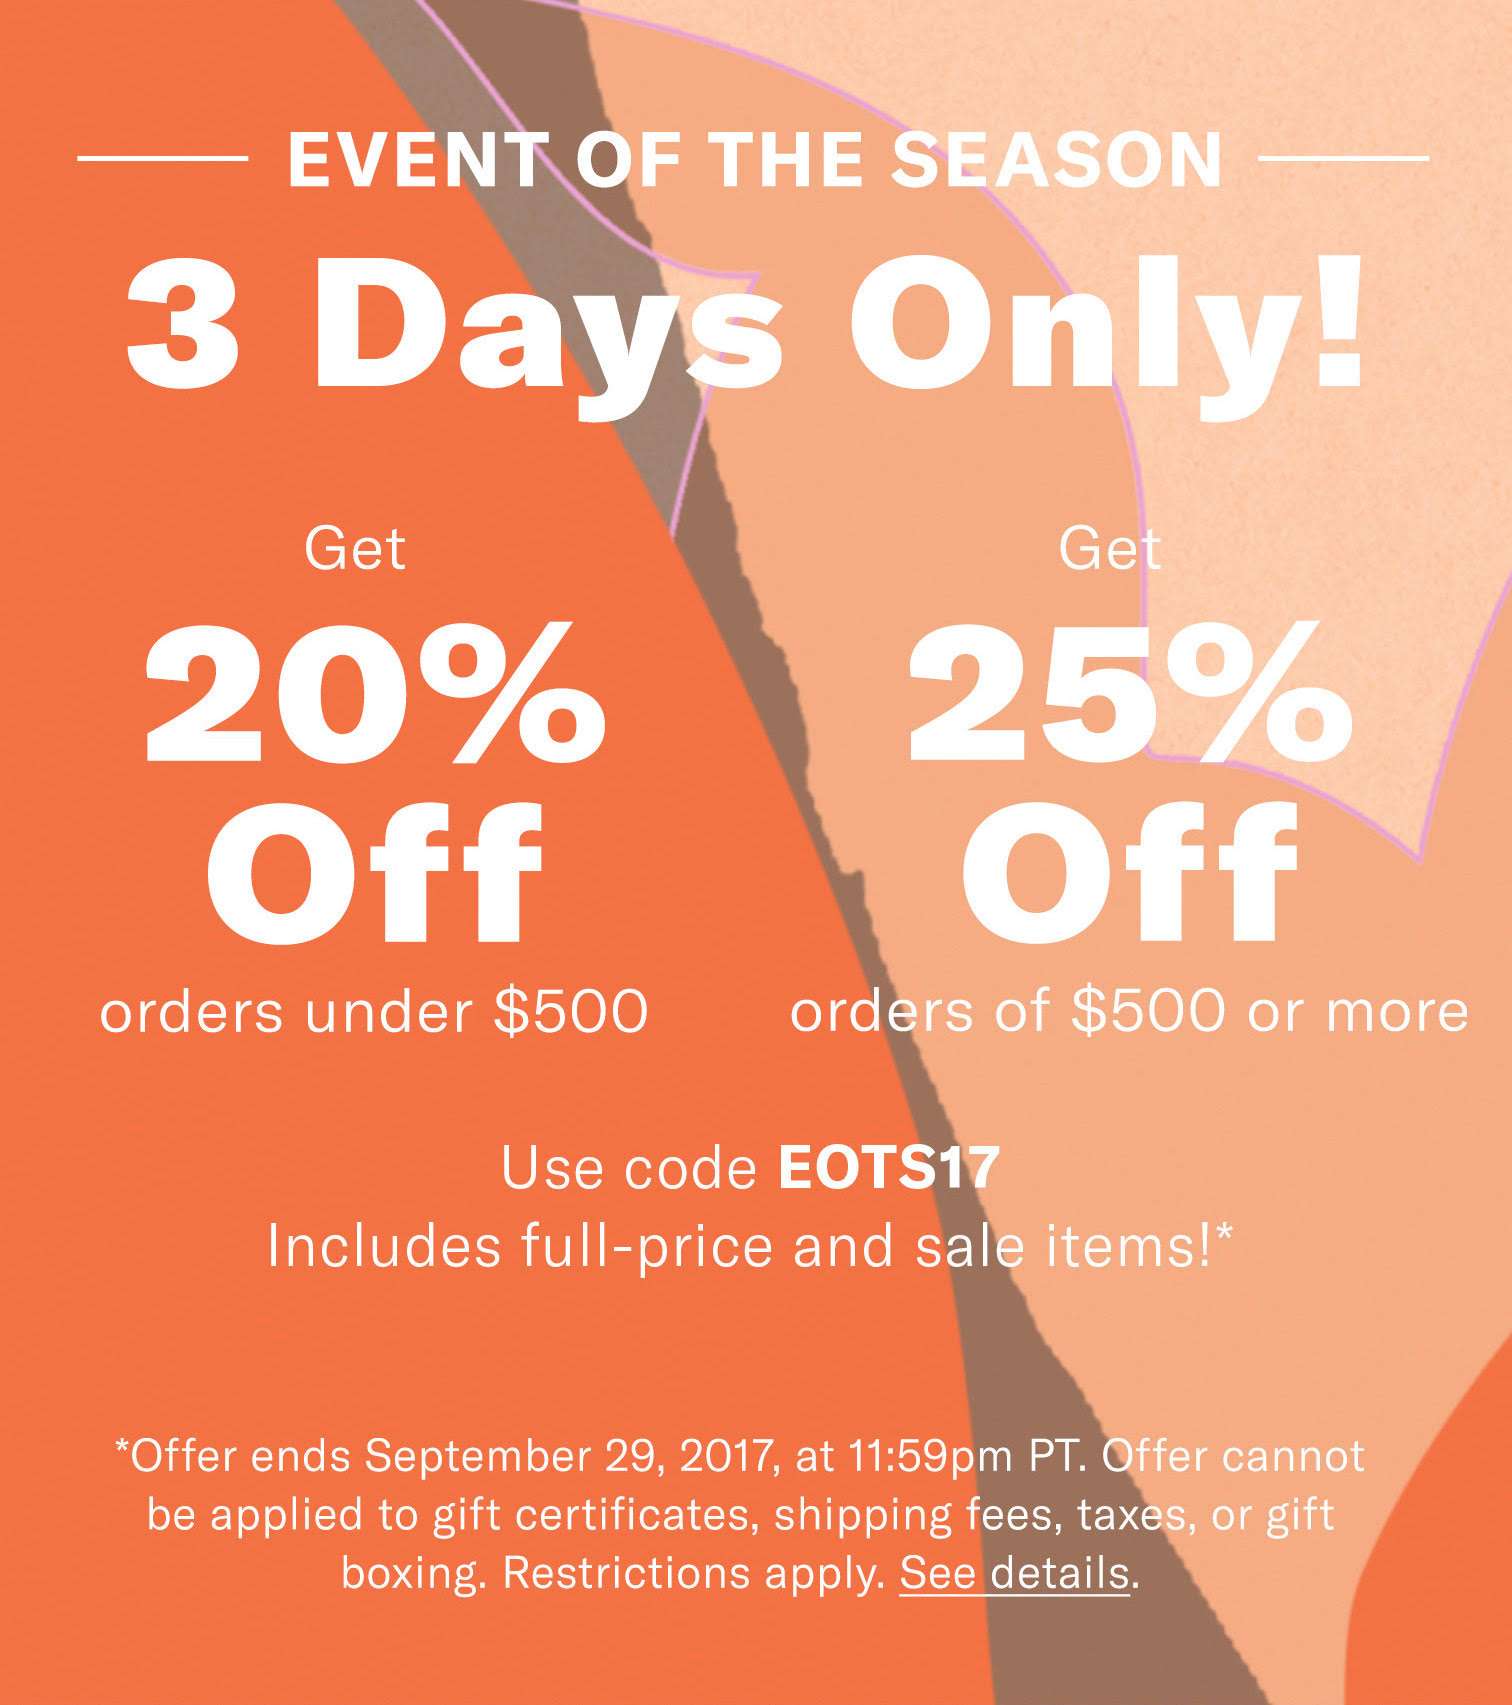 Shopbop End of Season Sale 2017!